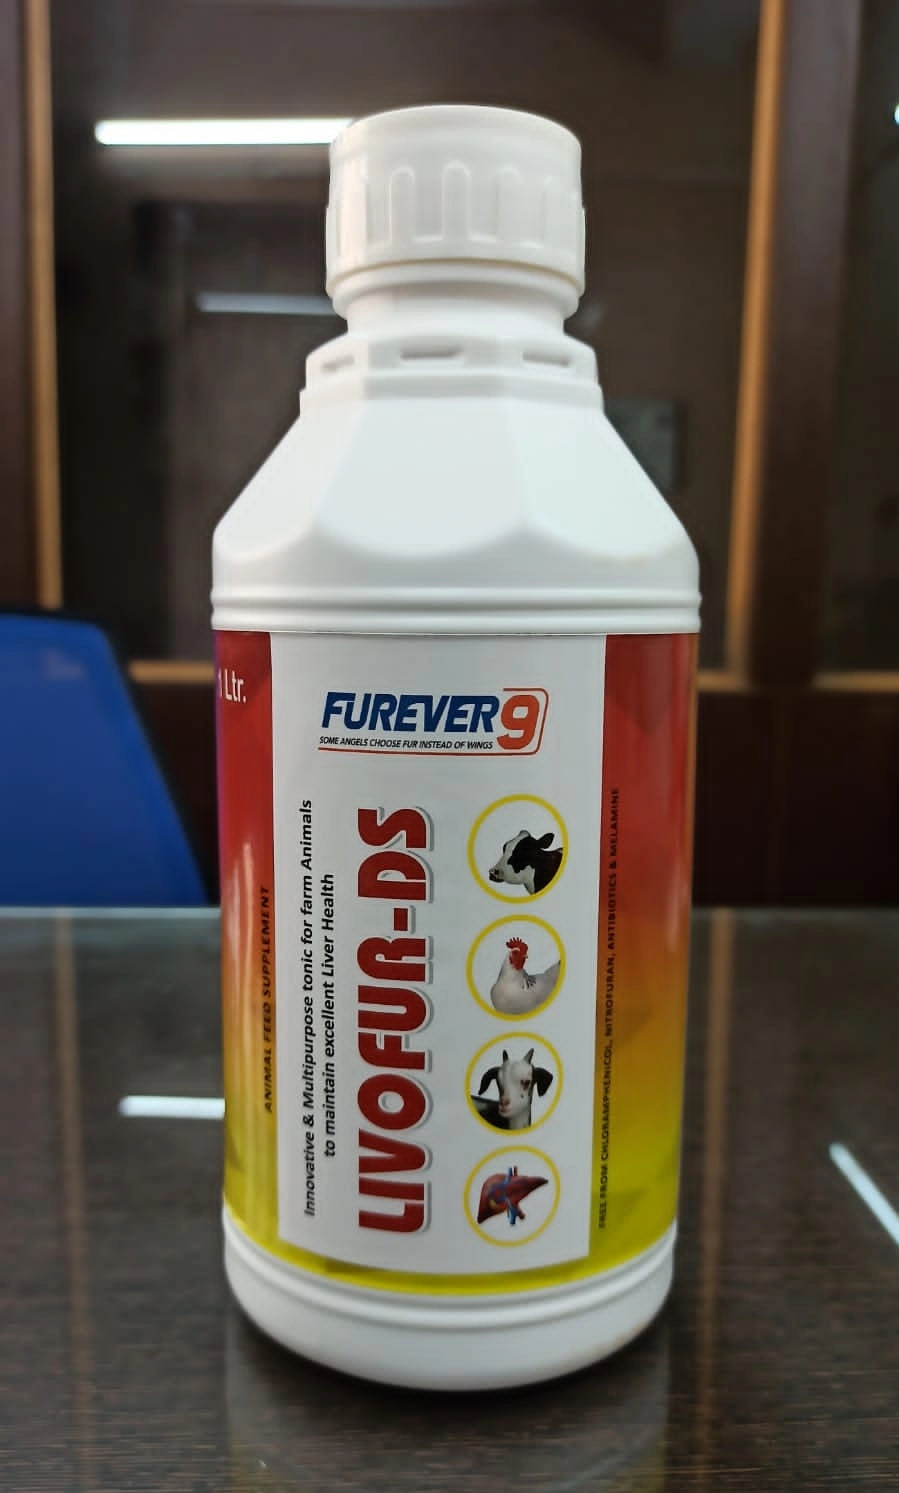  furever 9 Livofur-DS